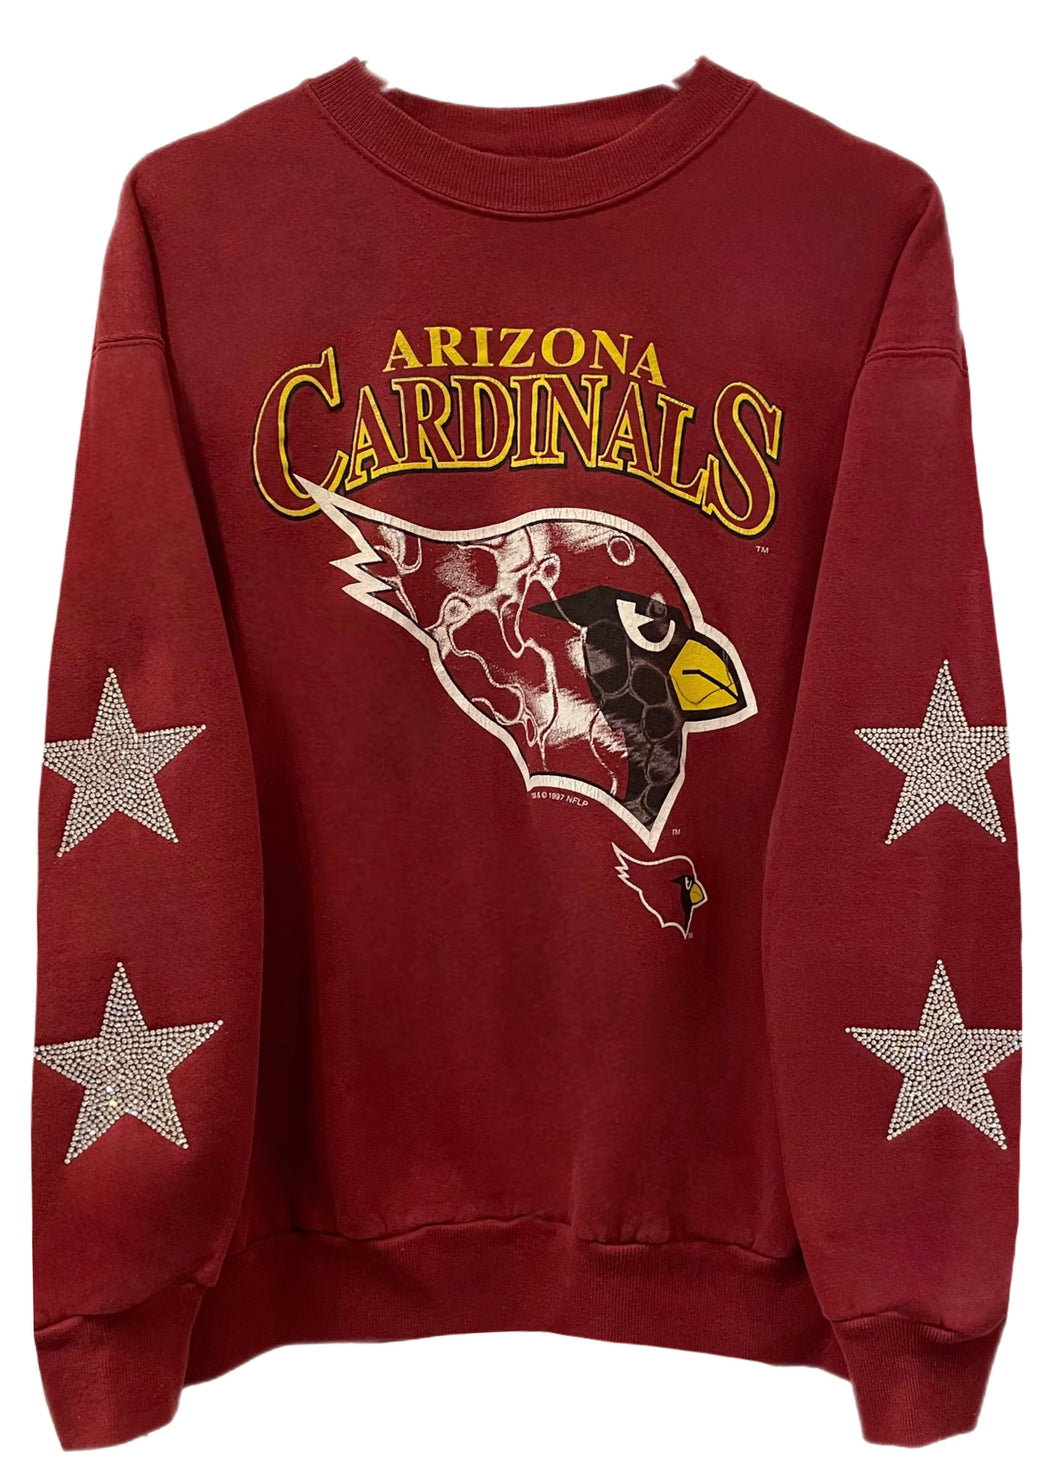 Arizona / Phoenix Cardinals, Football One of a KIND Vintage Sweatshirt with Crystal Star Design